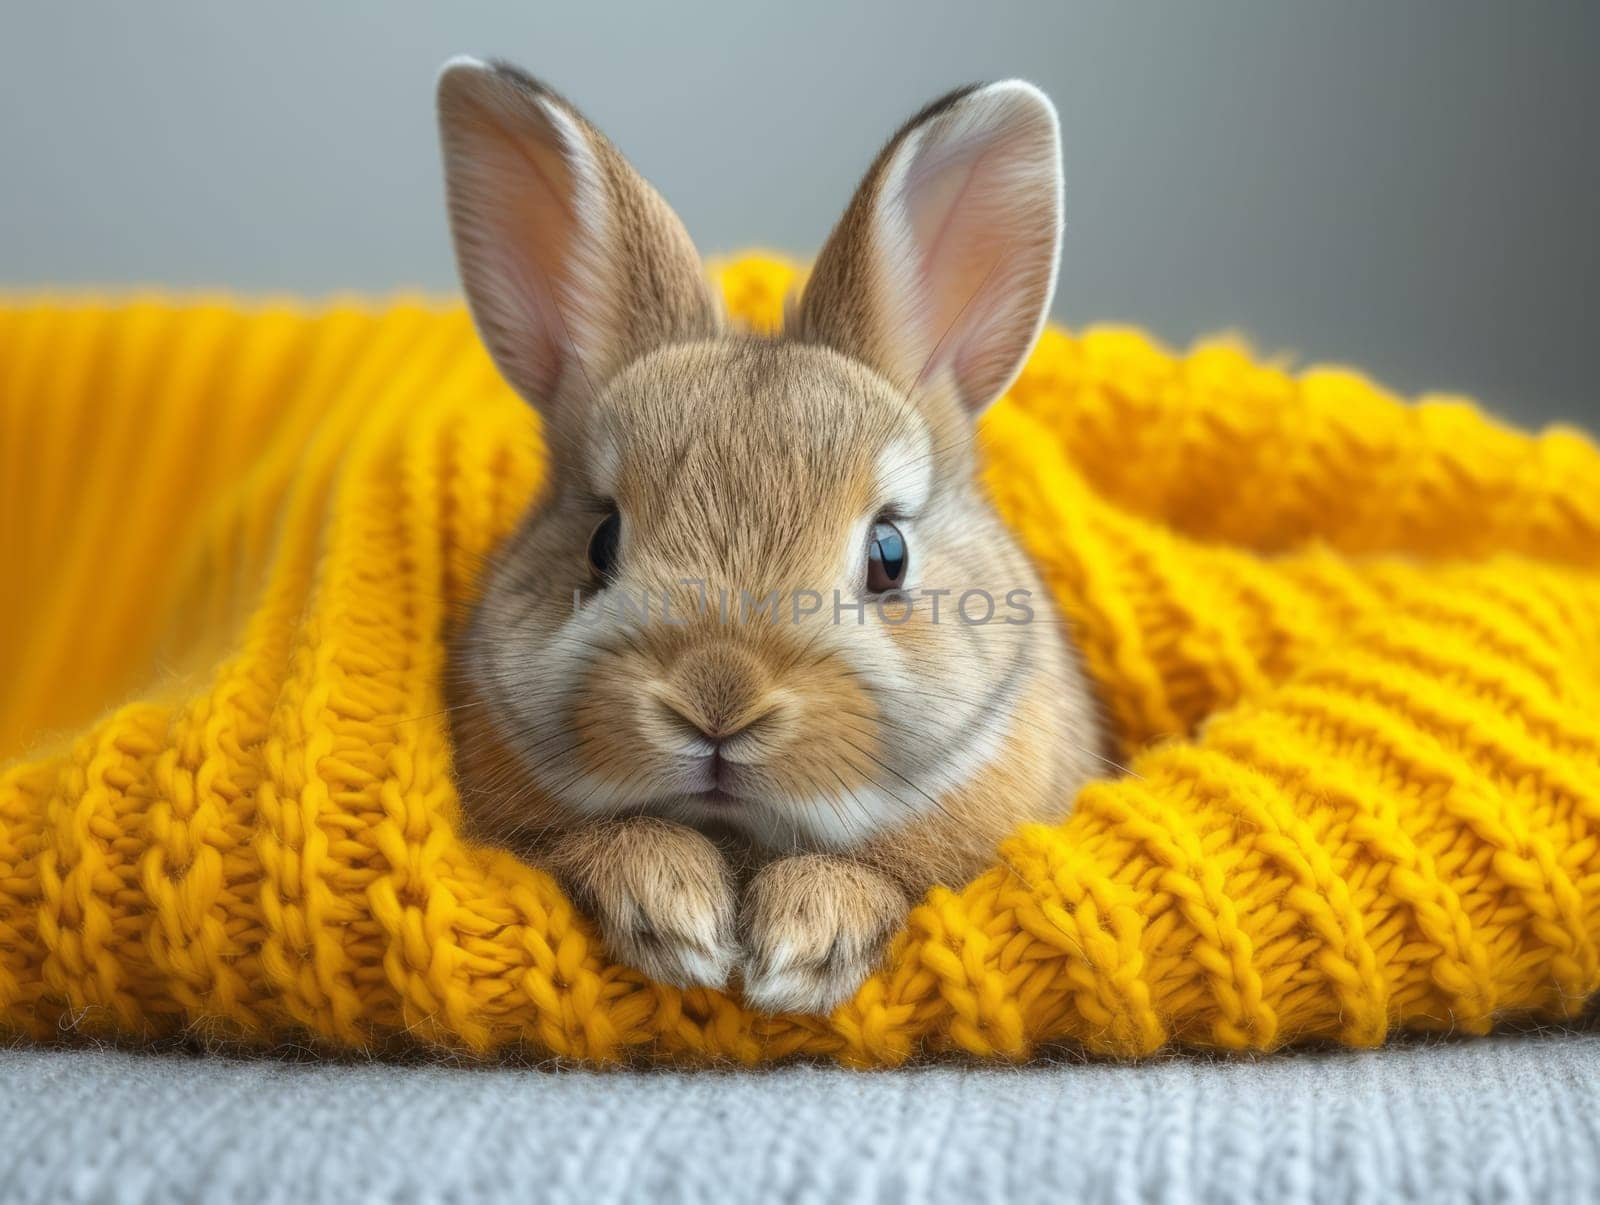 Cute Fluffy Easter Bunny in Yellow Blanket. Funny Rabbit Portrait by iliris